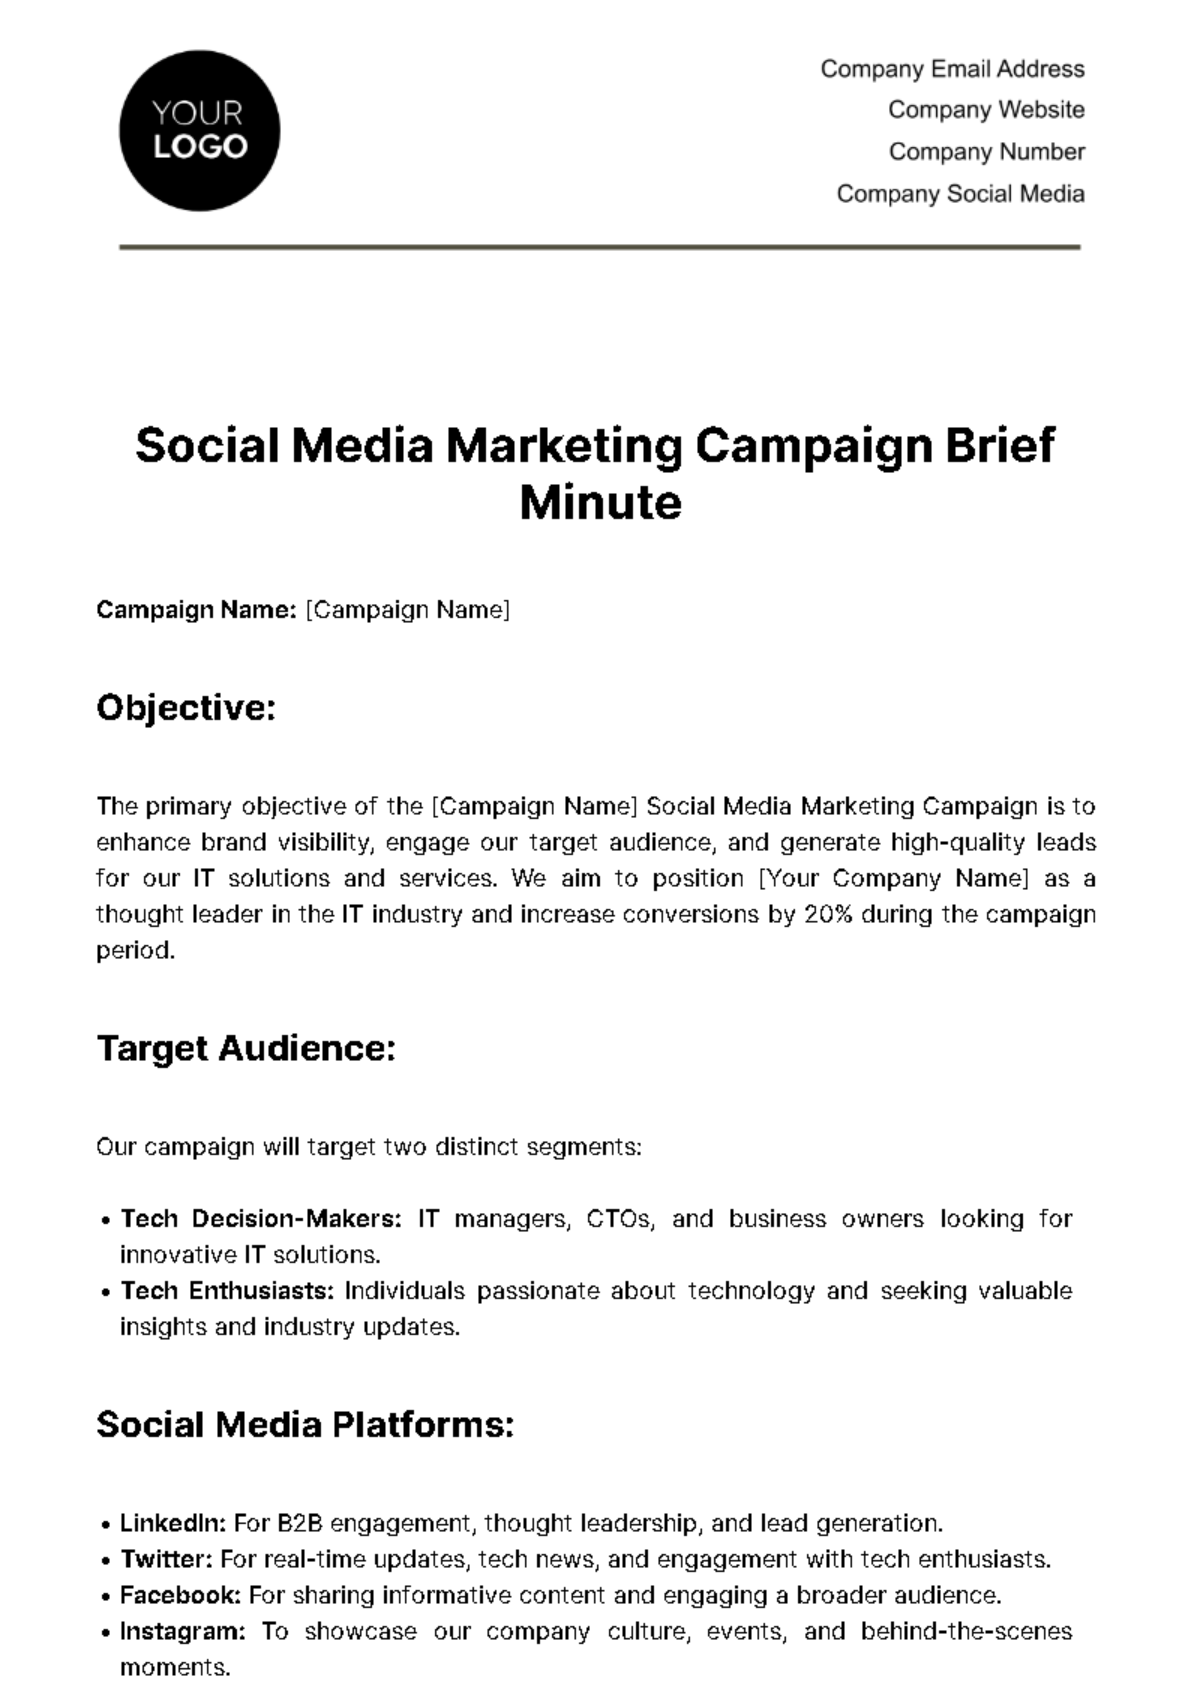 Free Social Media Marketing Campaign Brief Minute Template